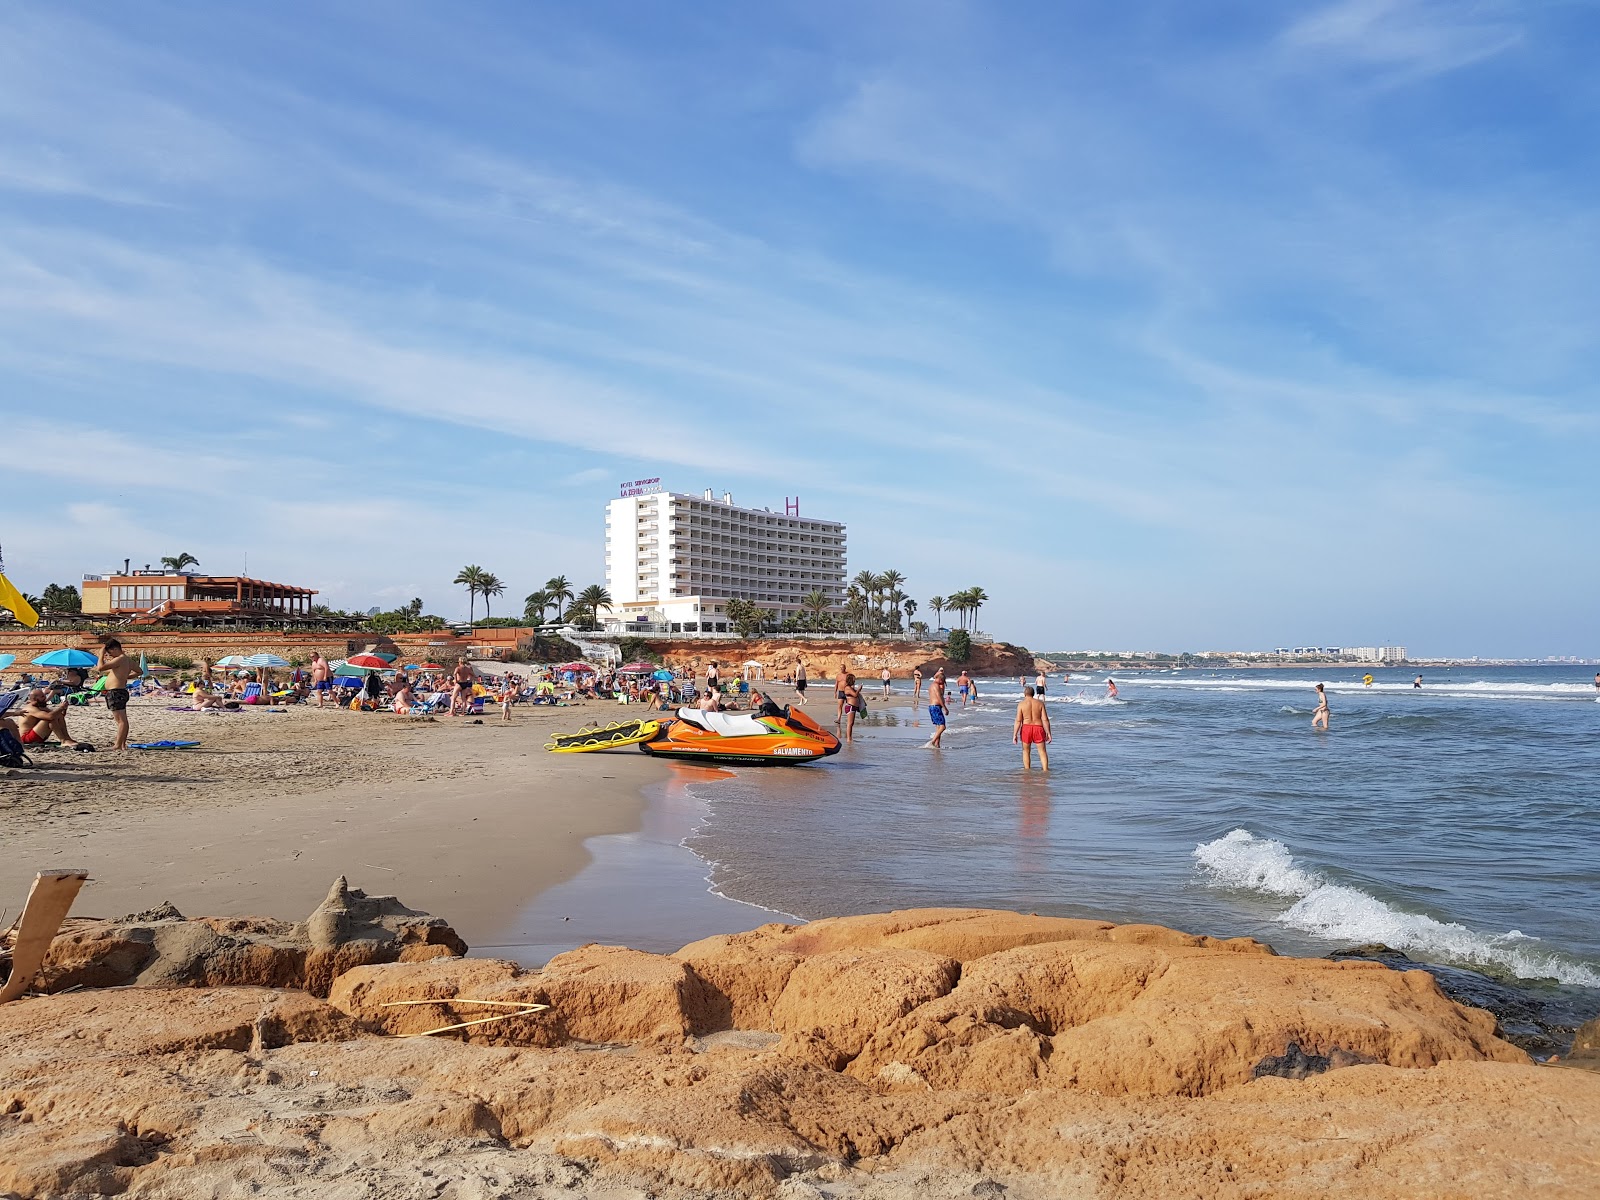 Foto van Playa la Zenia met hoog niveau van netheid